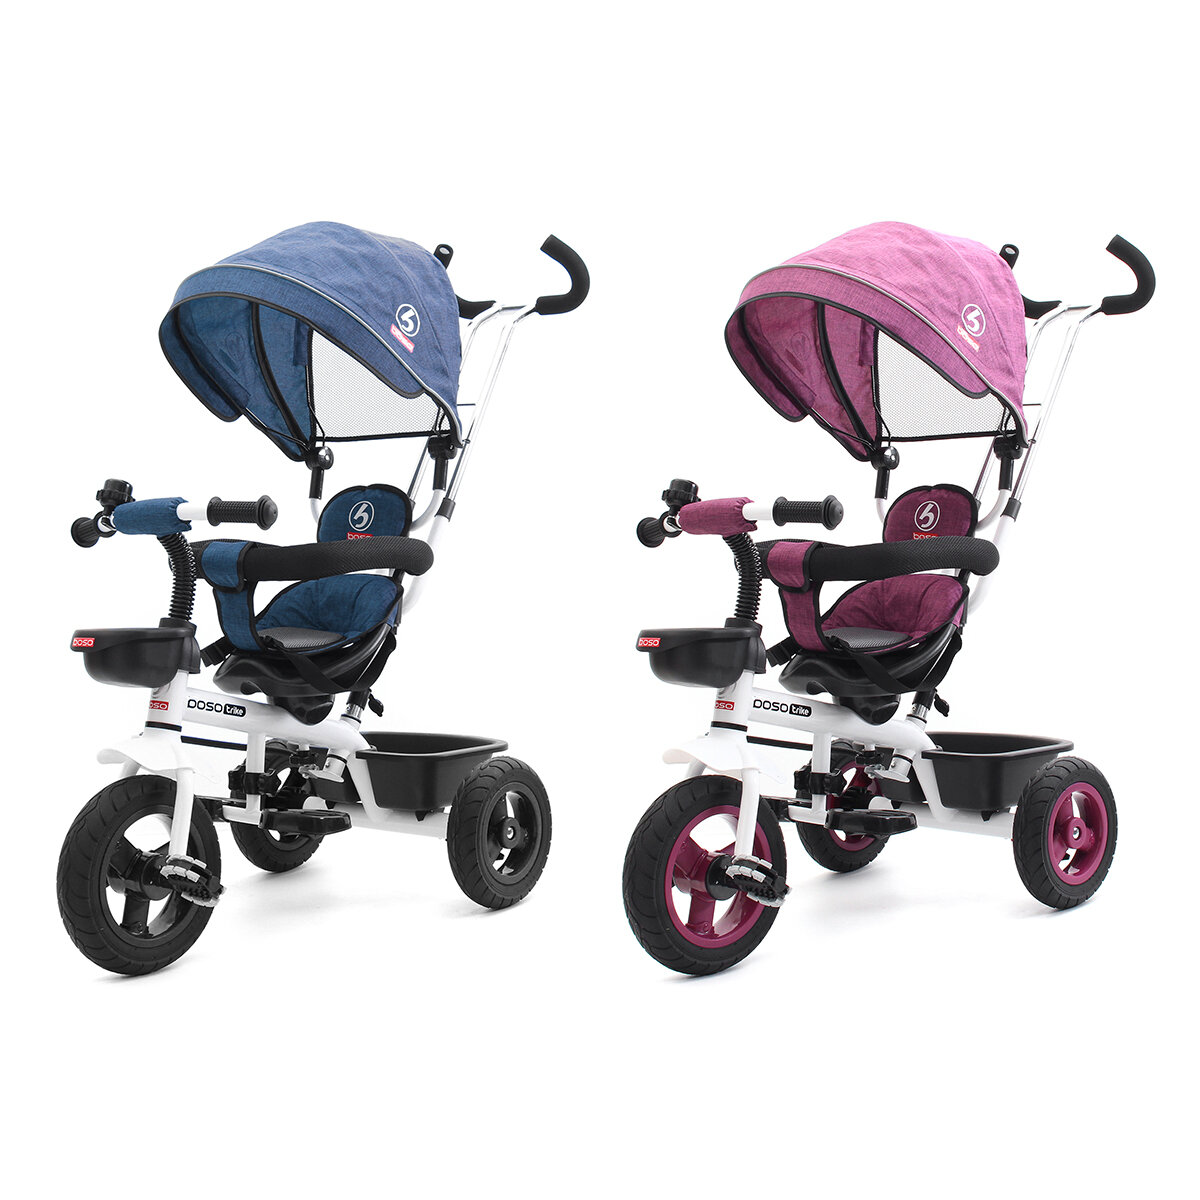 3 wheel baby stroller